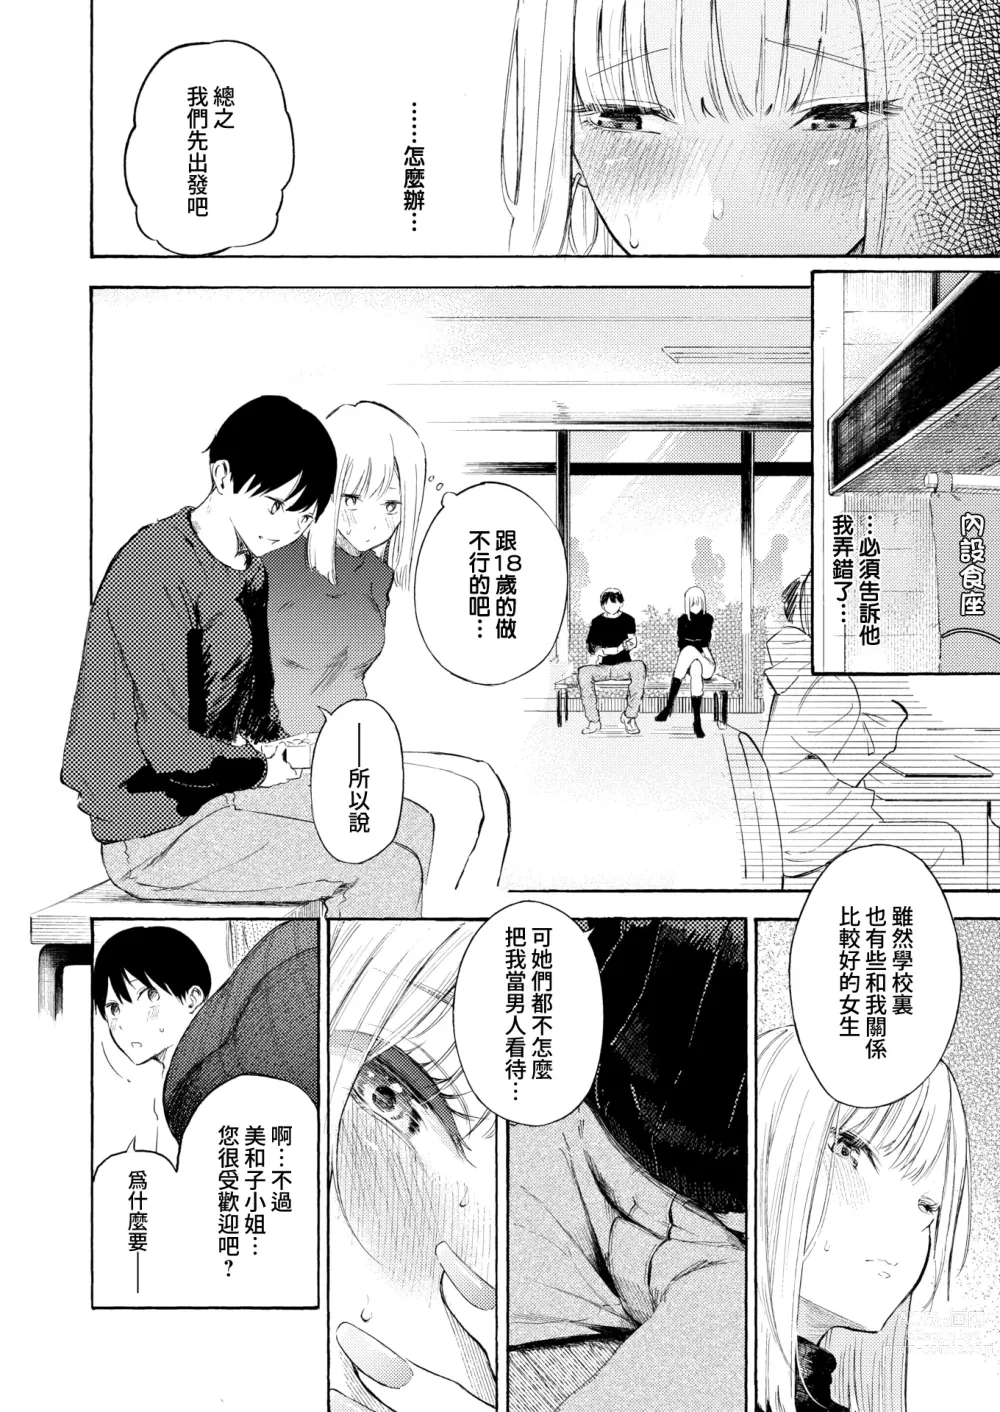 Page 12 of manga 好球區